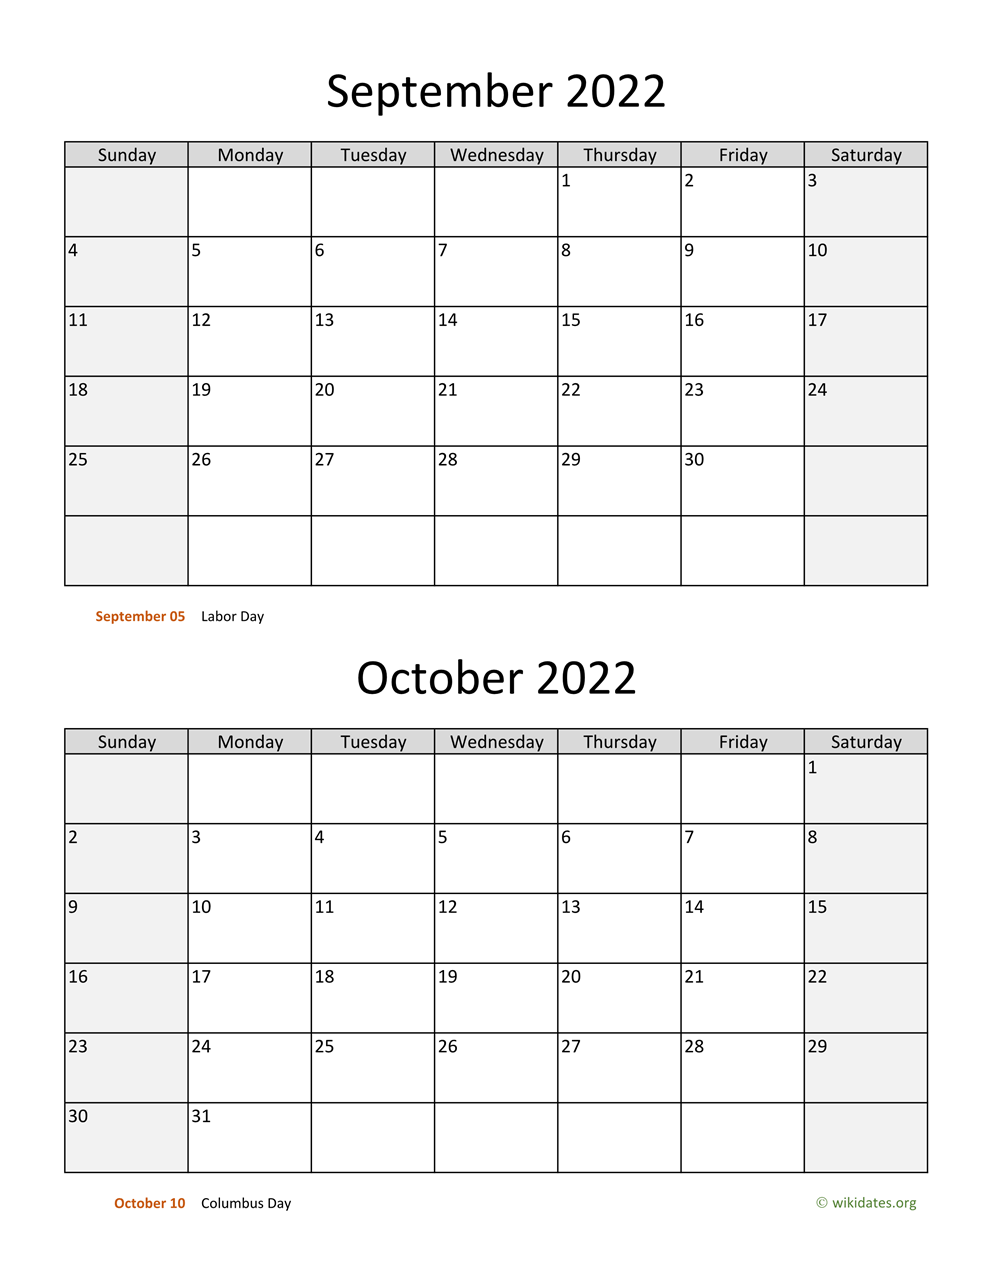 September October Calendar 2022 September And October 2022 Calendar | Wikidates.org